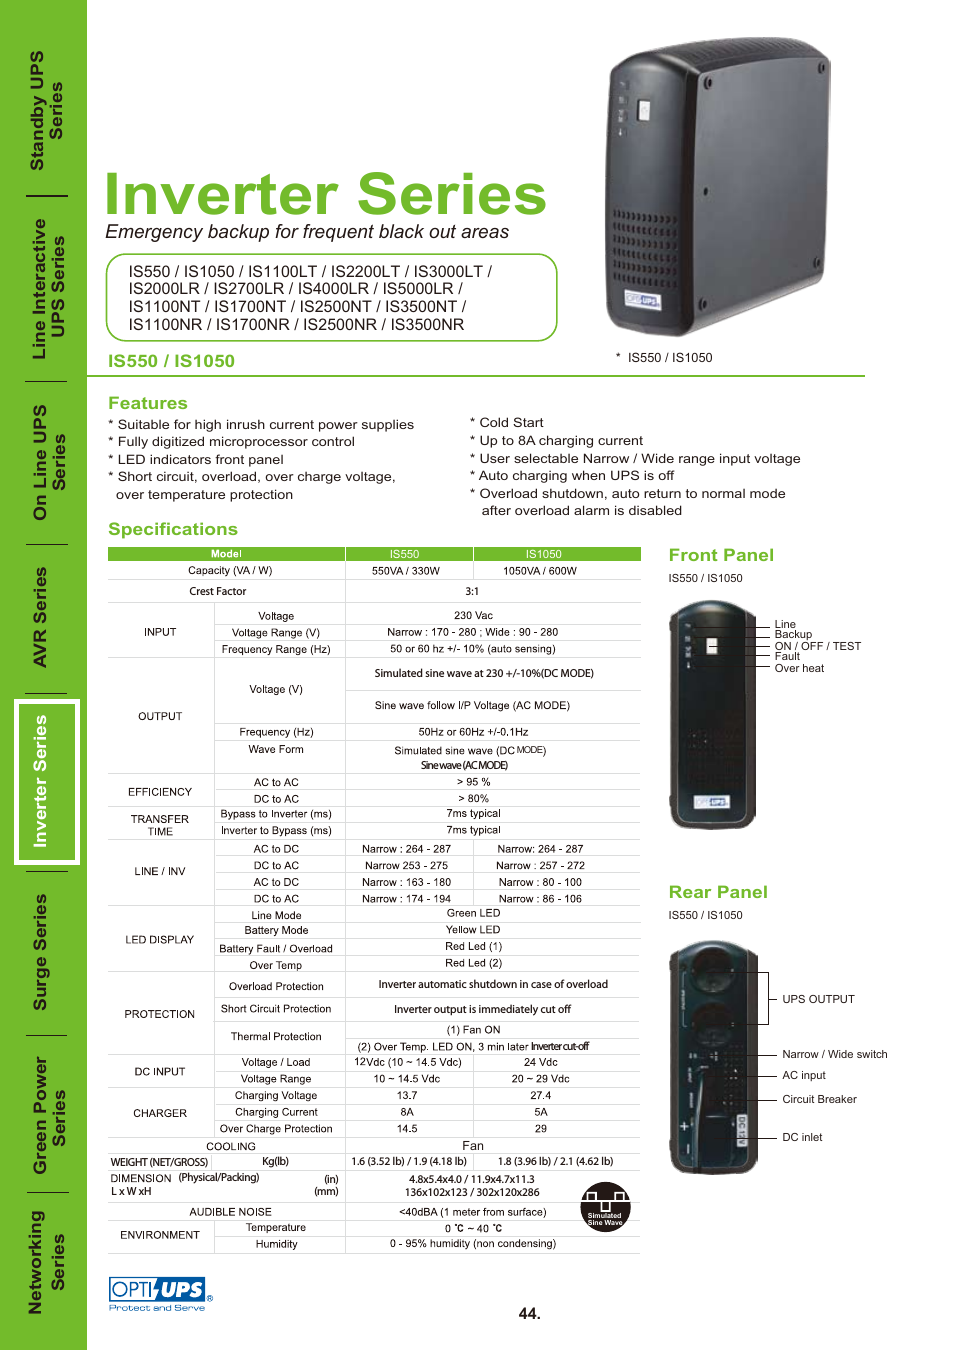 Inverter Series IS5000LR